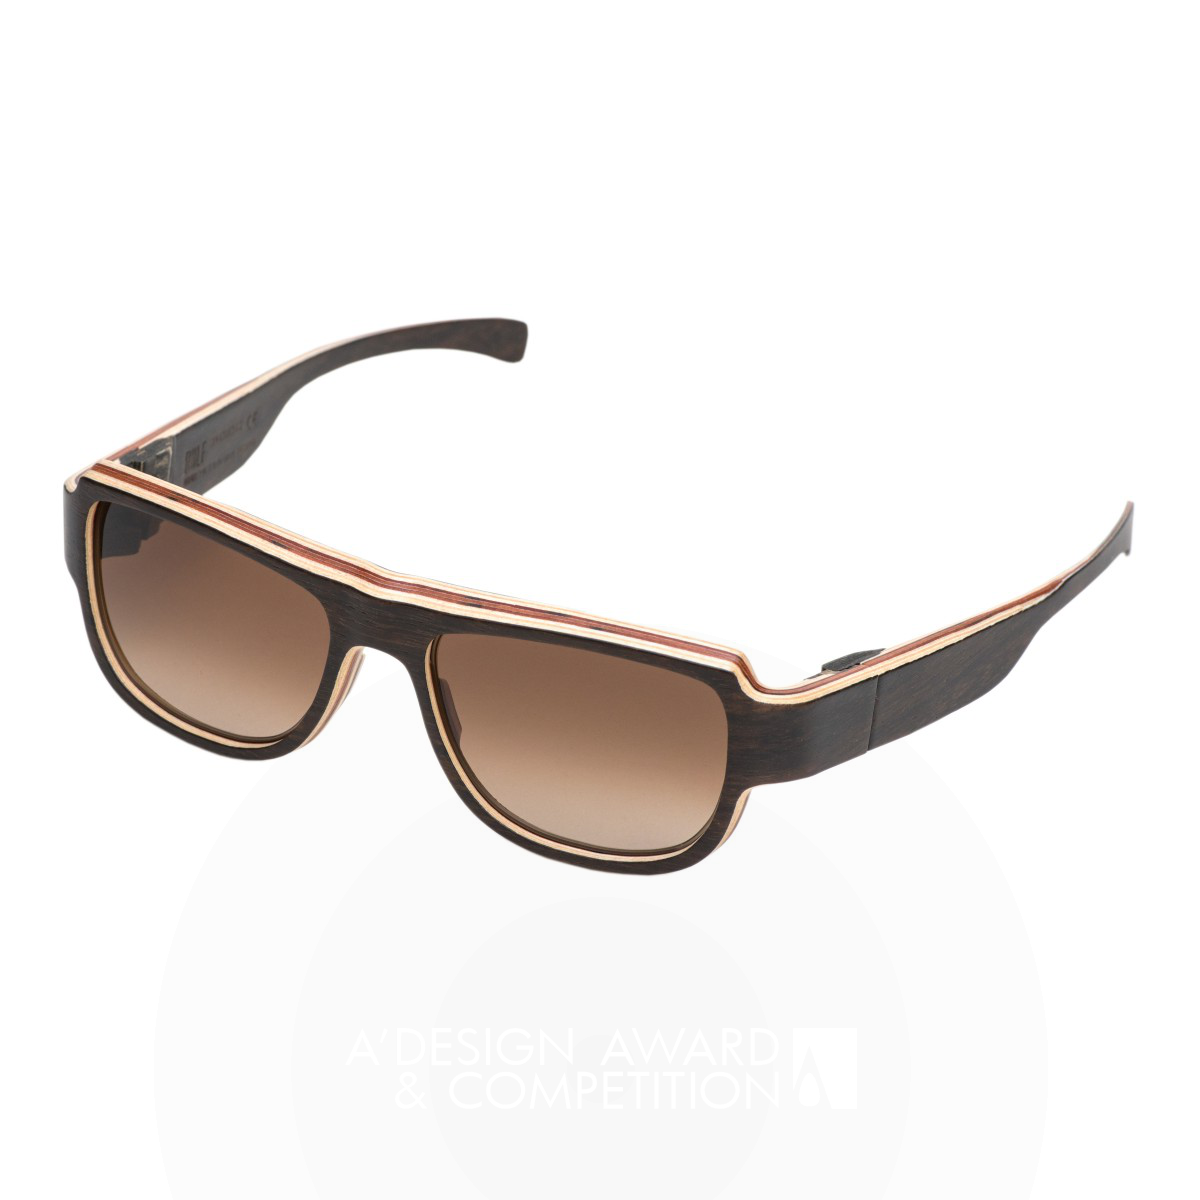 Camaro | advanced collection <b>the next level of wooden eyewear